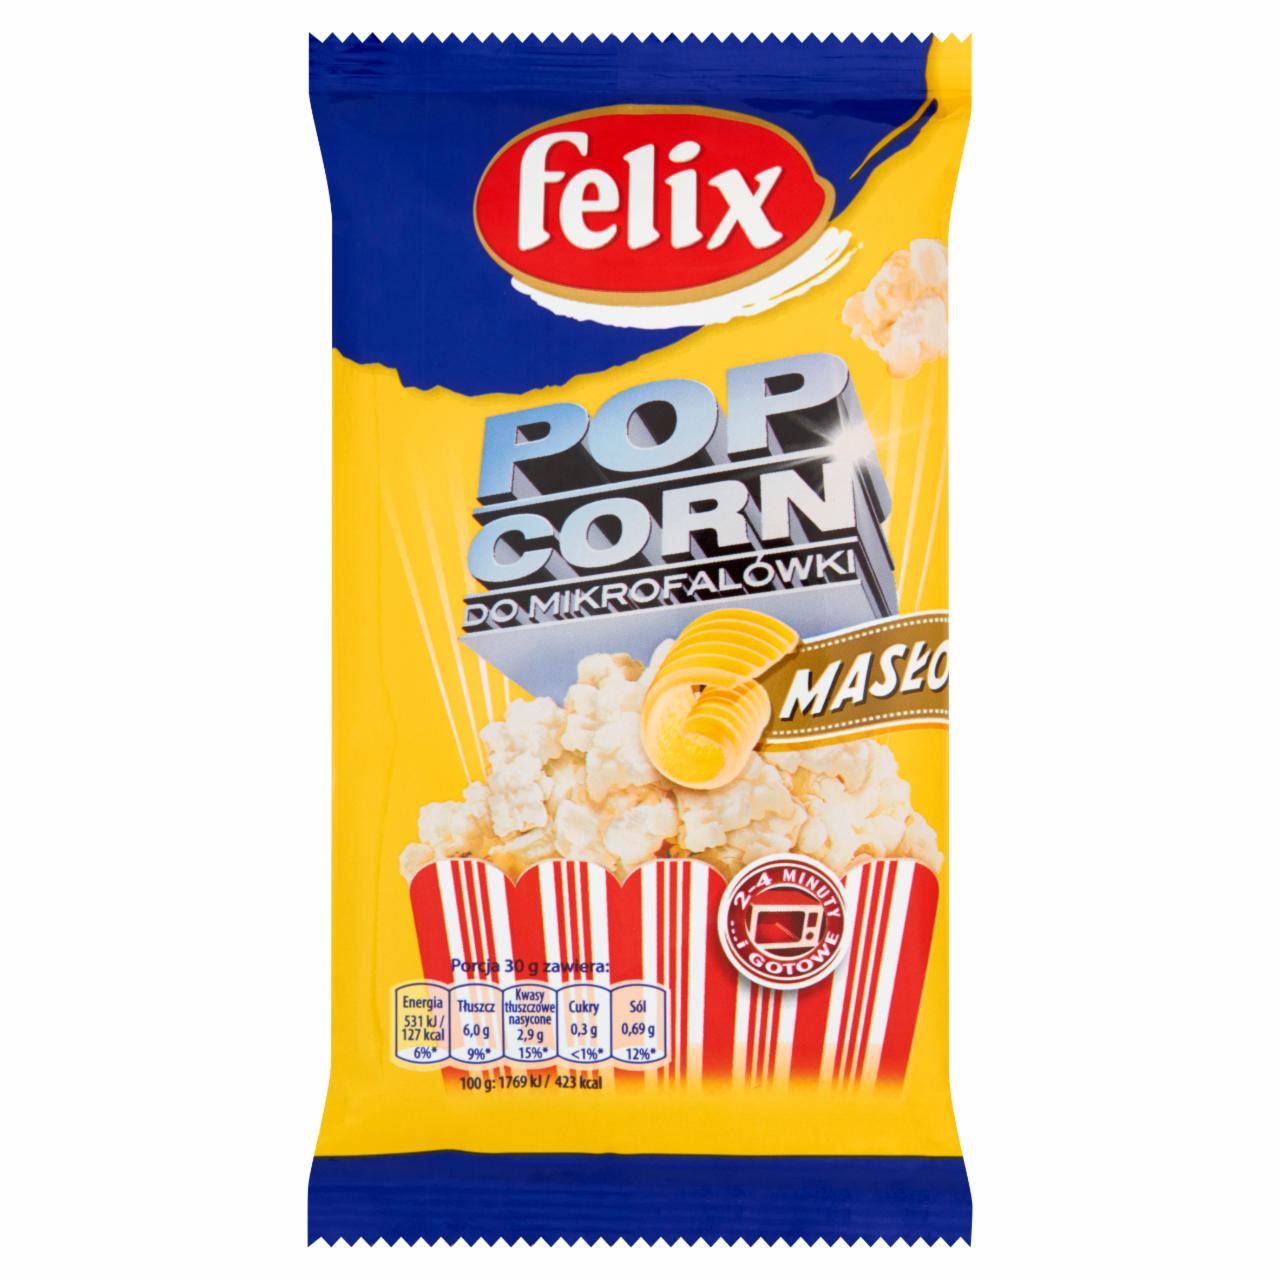 Фото - Попкорн со вкусом сливочного масла для микроволновки Felix